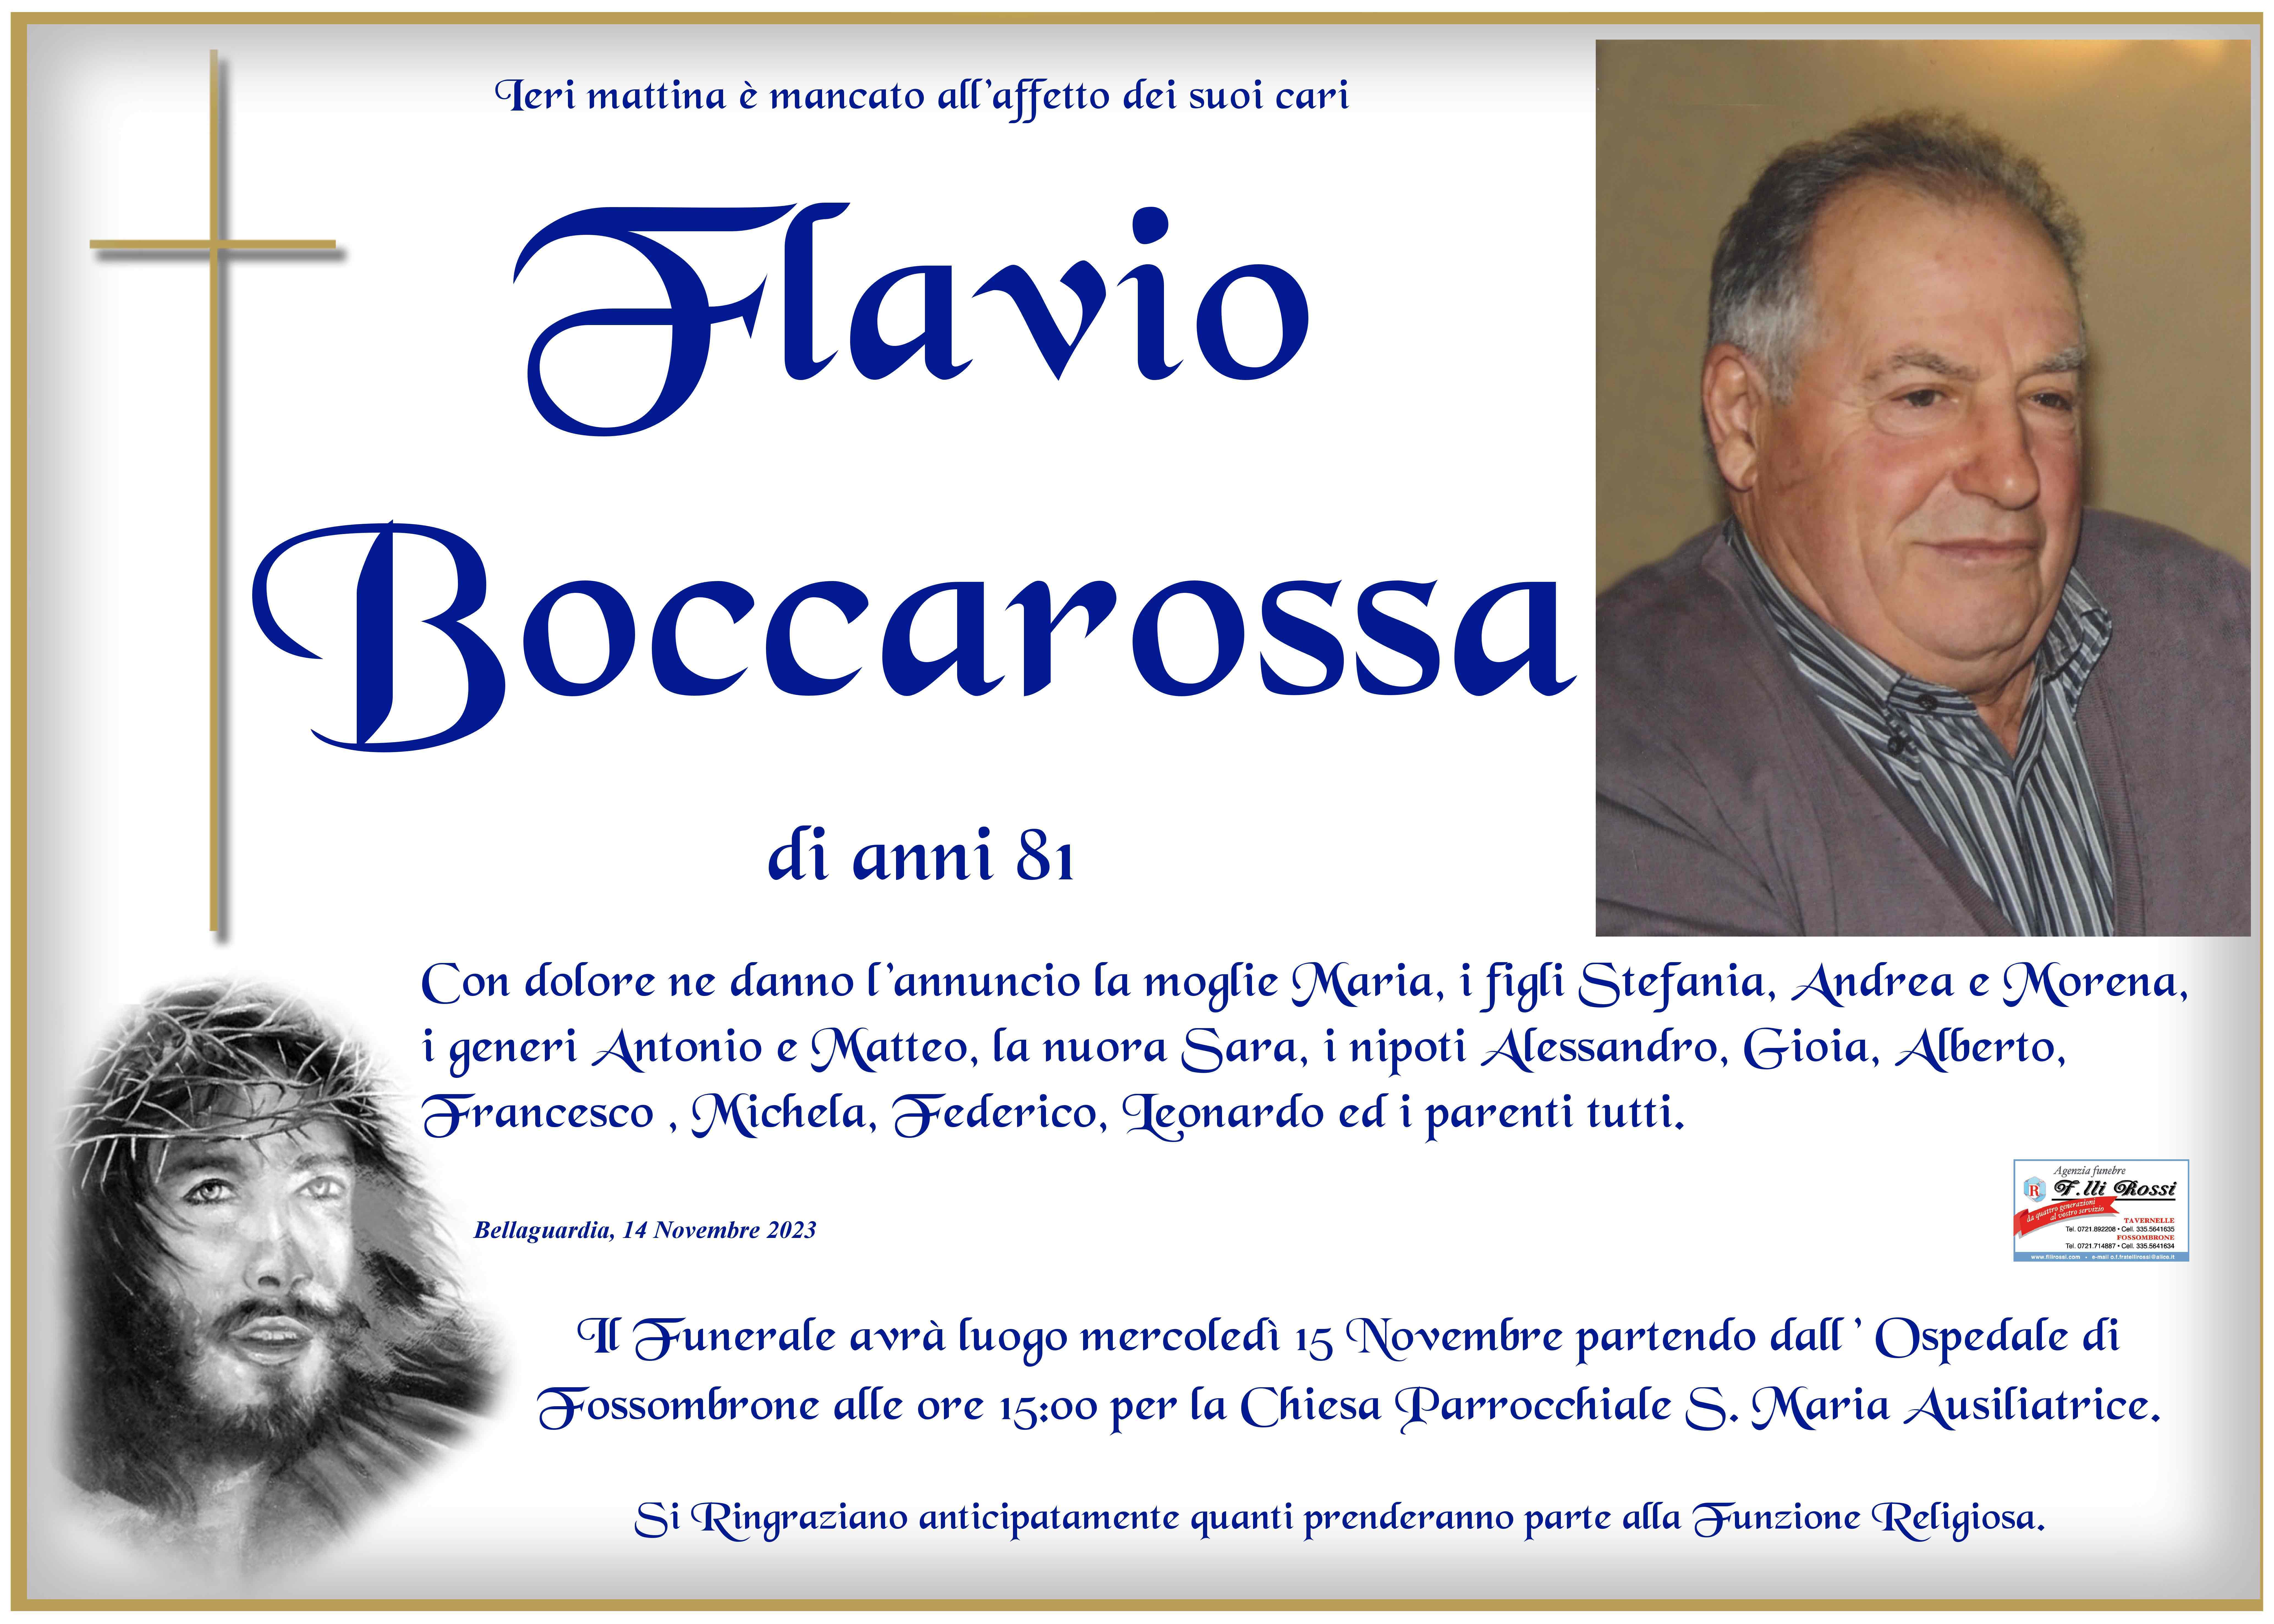 Flavio Boccarossa